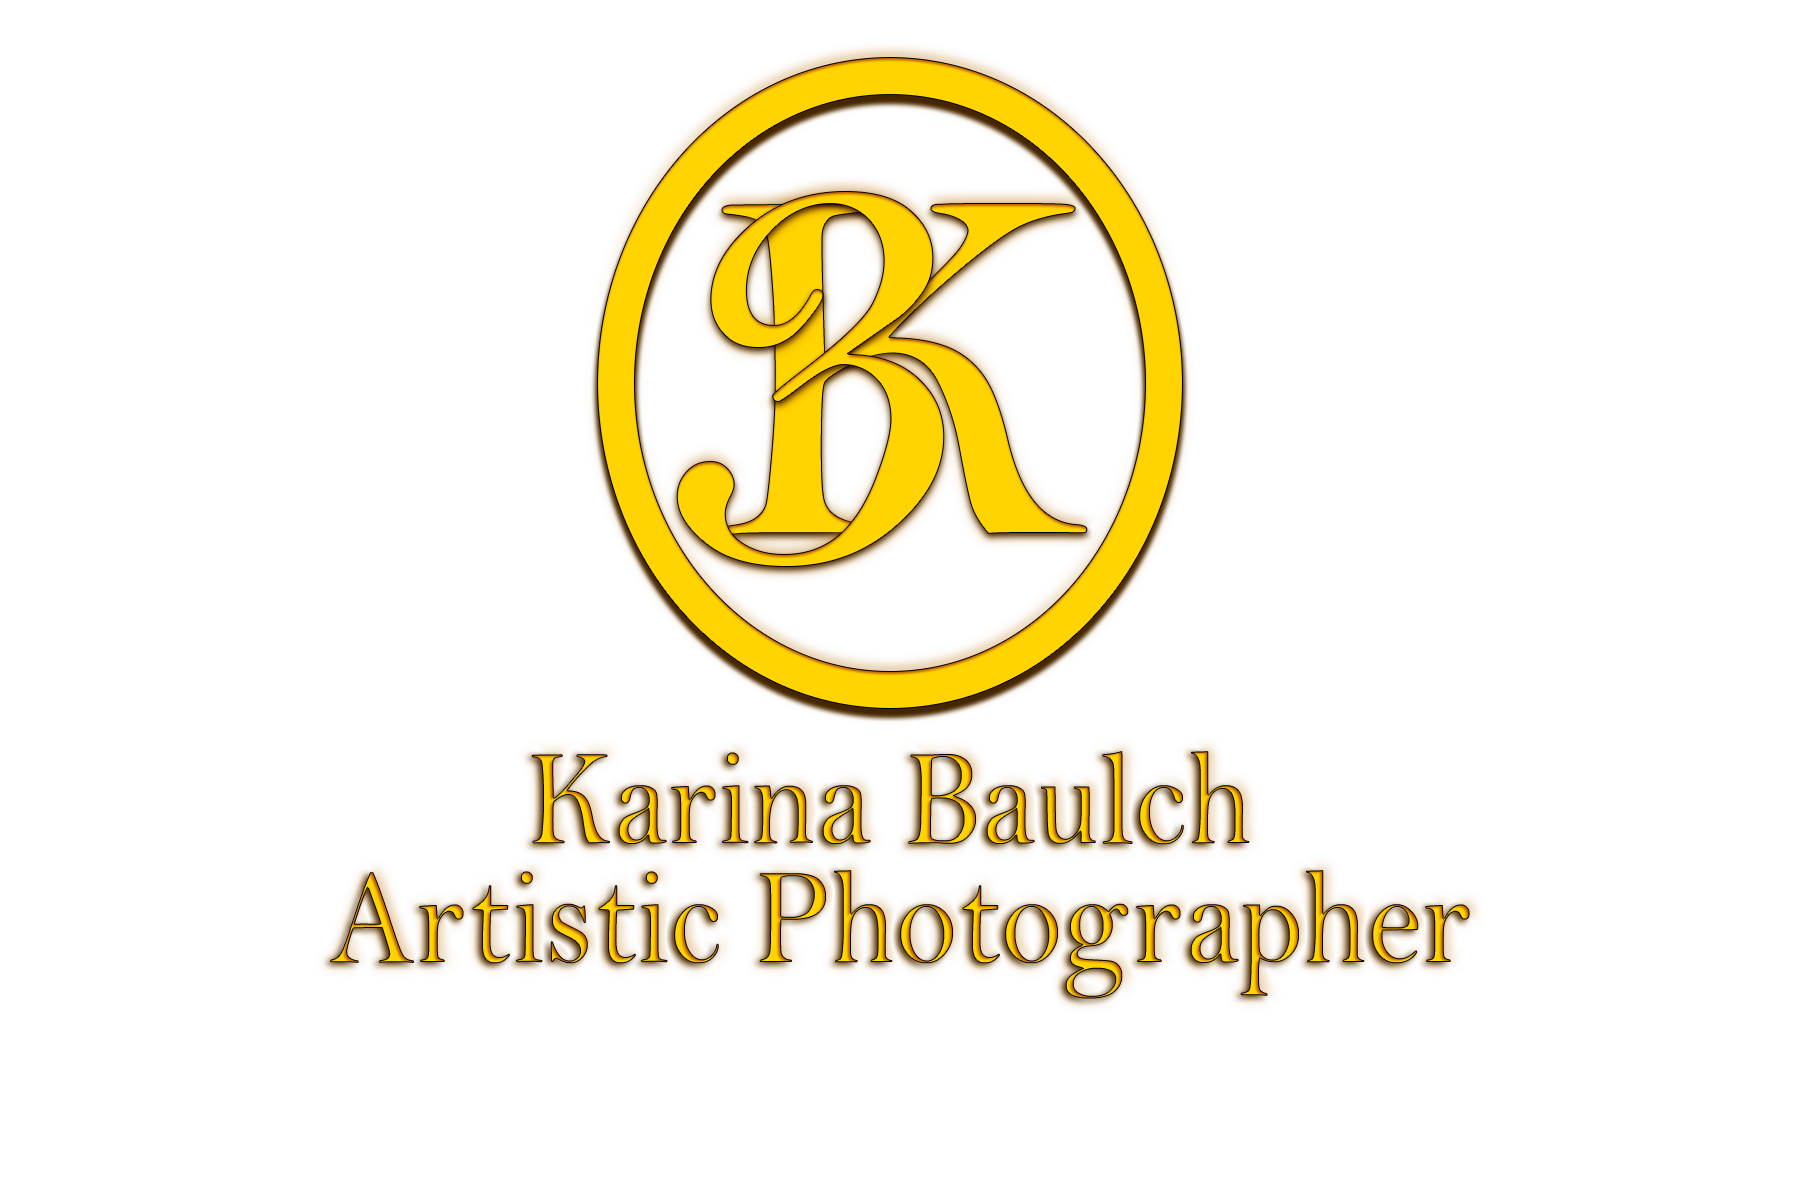 Karina Baulch-Artist Photographer